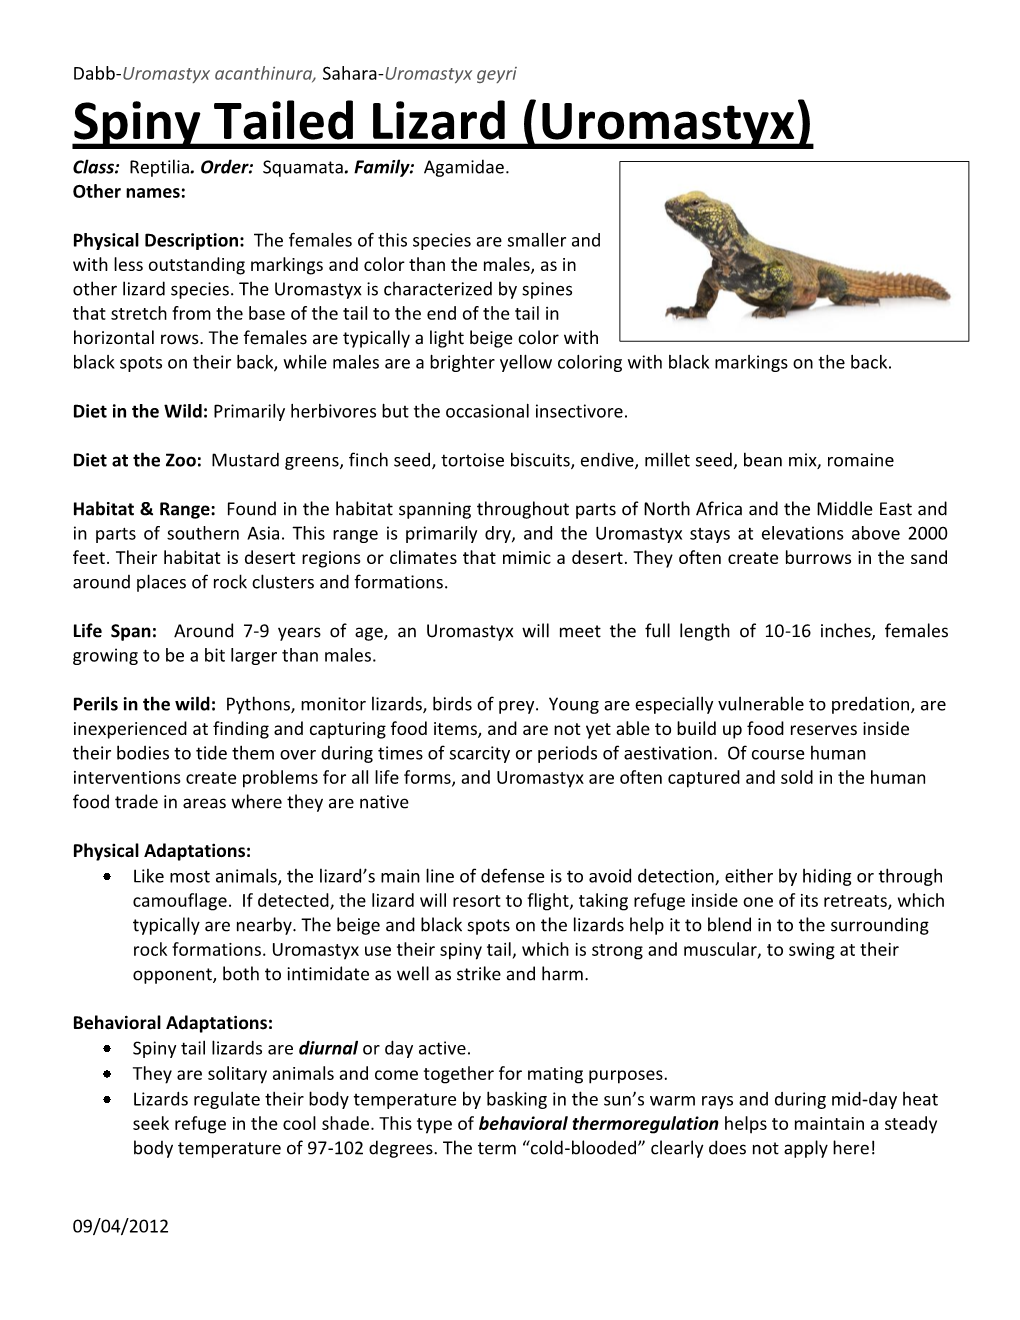 Spiny Tailed Lizard (Uromastyx) Class: Reptilia